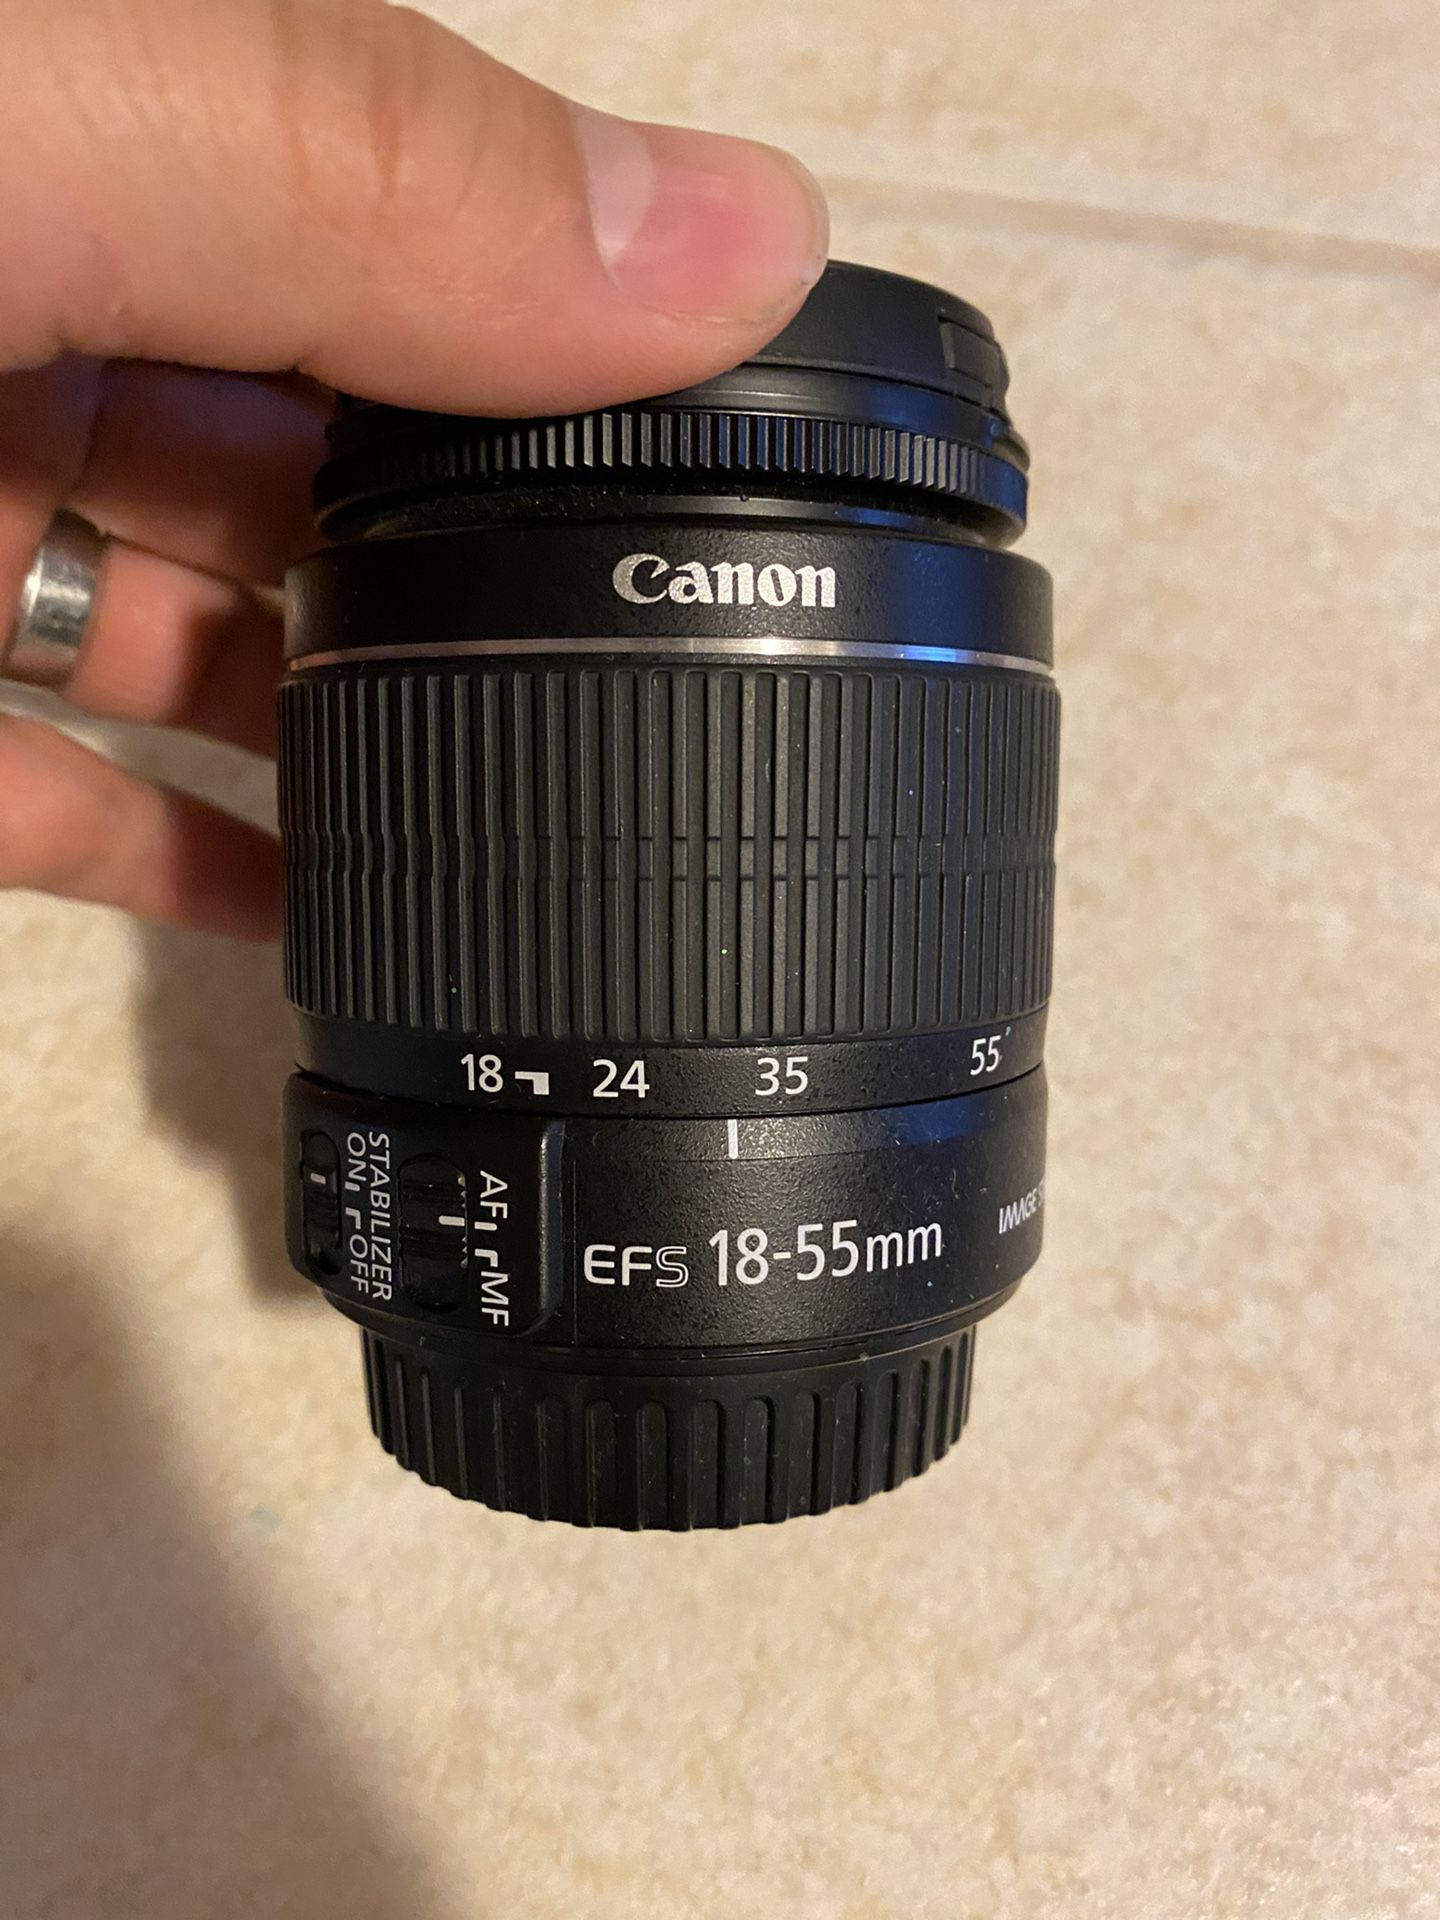 Canon 18-55 mm lens